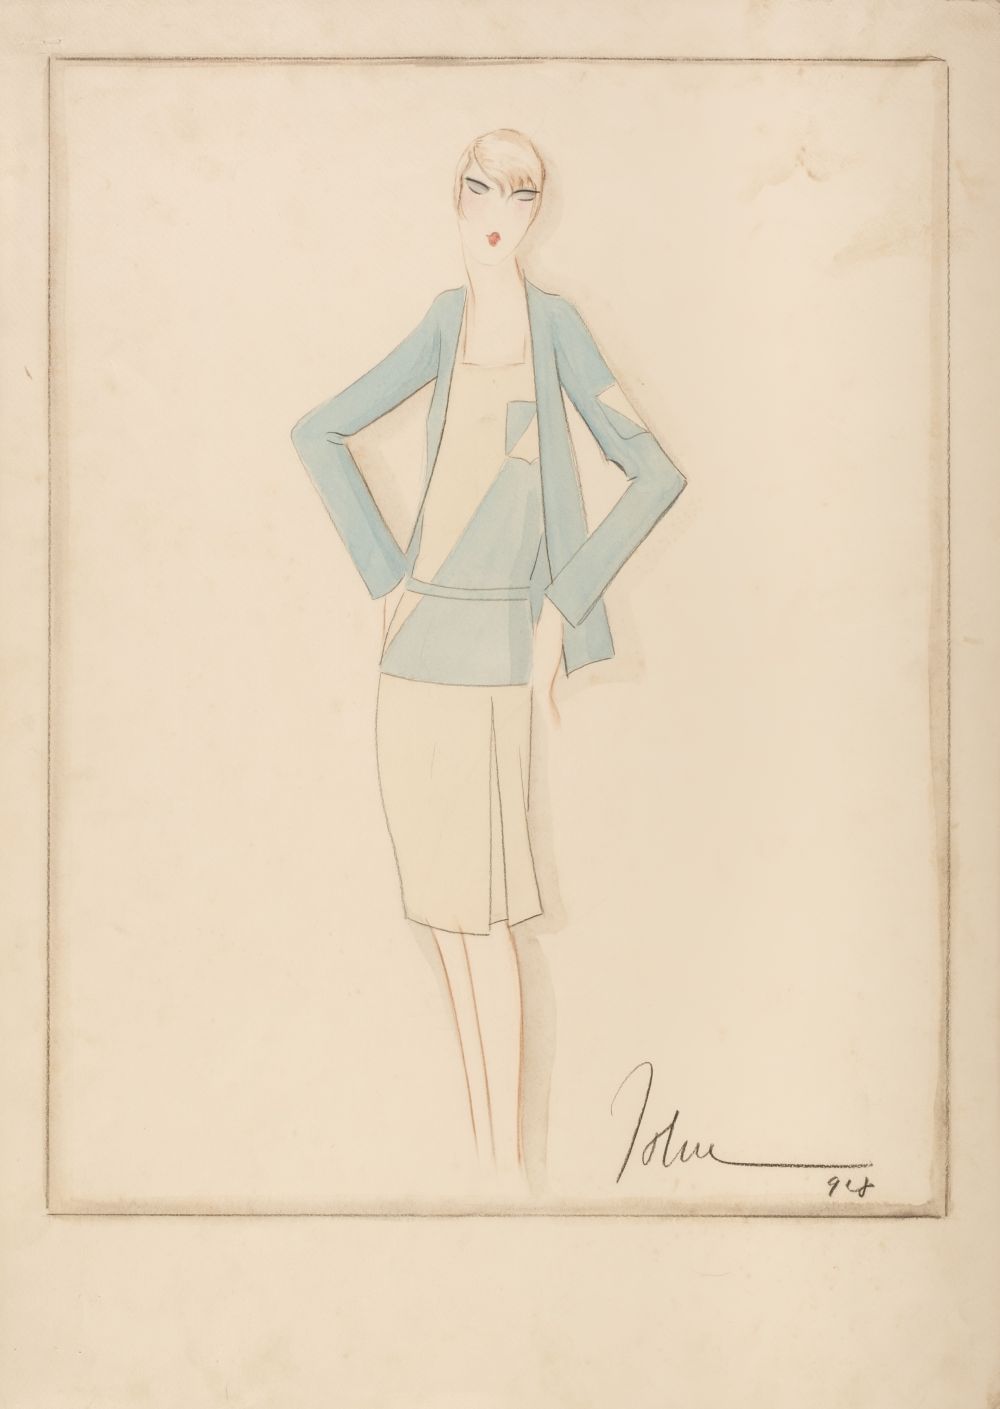 * Guida (John, 1896-1965). Fashion design for a pleated dress and jacket, circa 1930